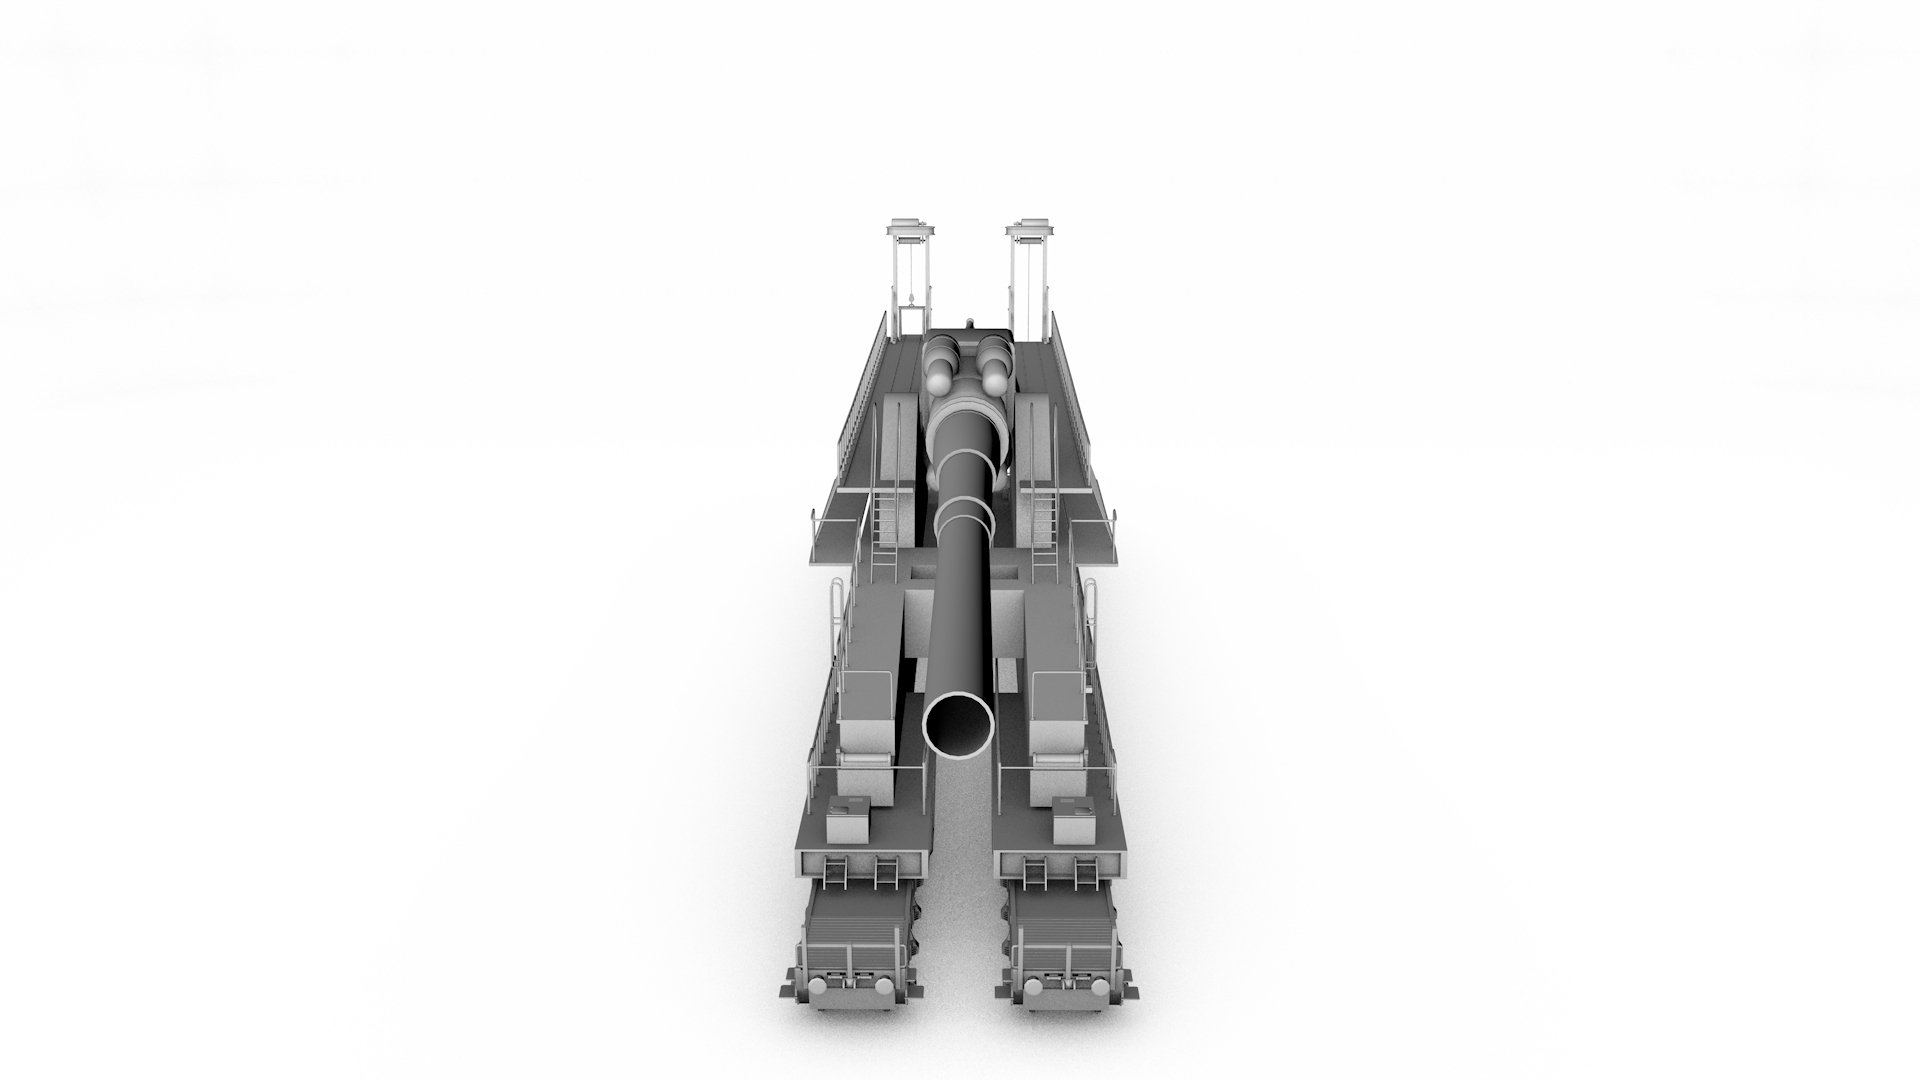 Schwerer Gustav Railway Gun - 3D model by adrianovalentini